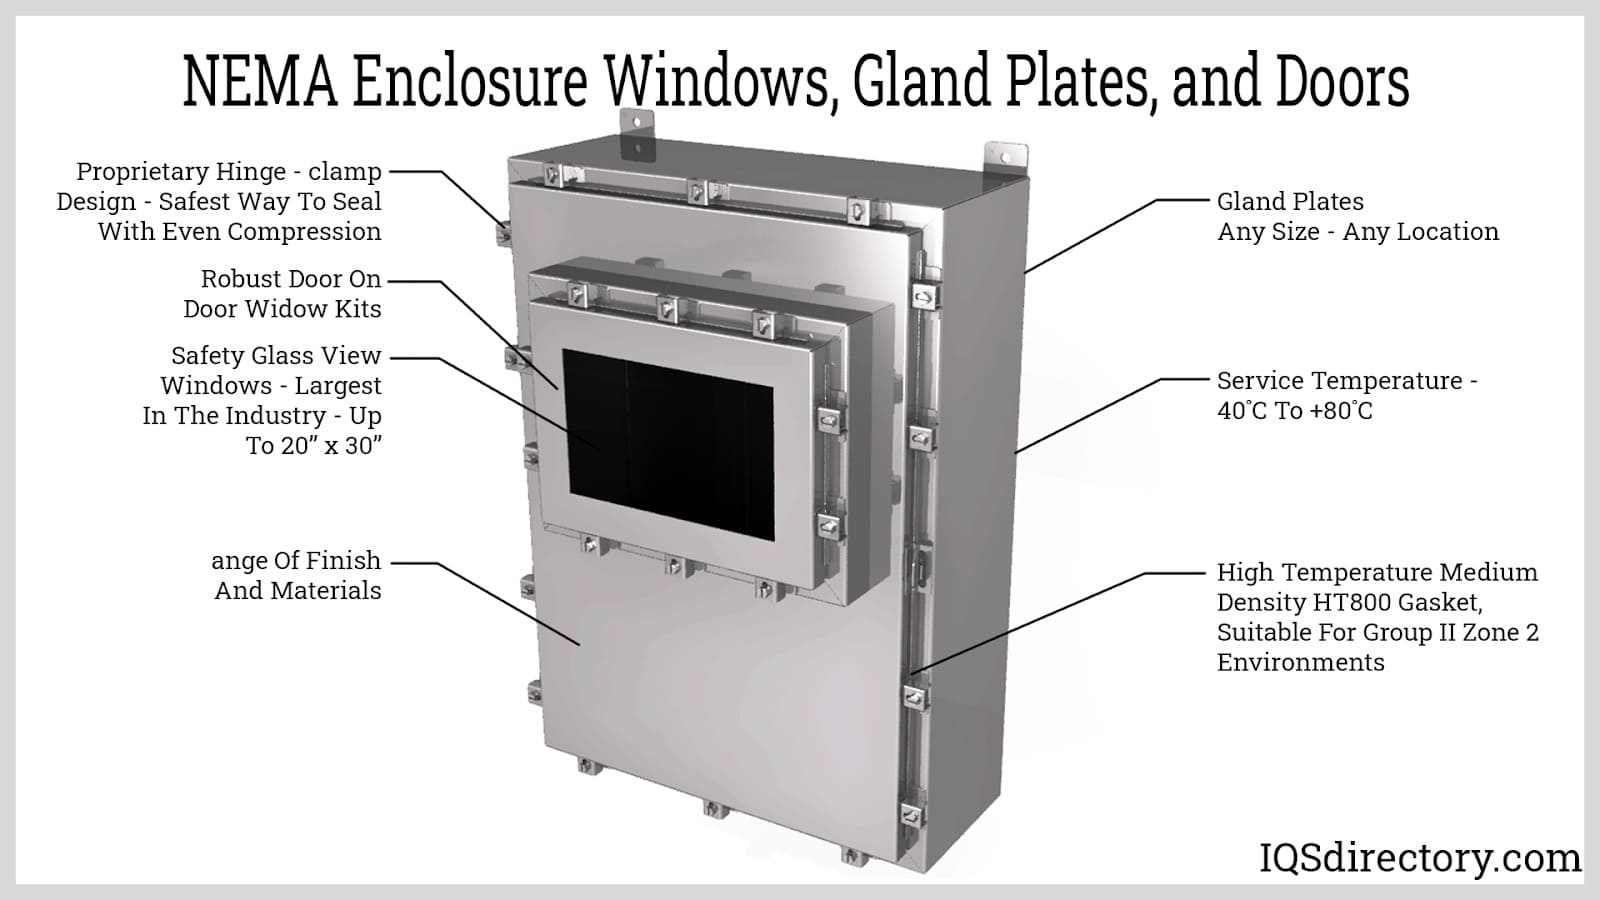 NEMA Enclosure Windows, Gland Plates, and Doors